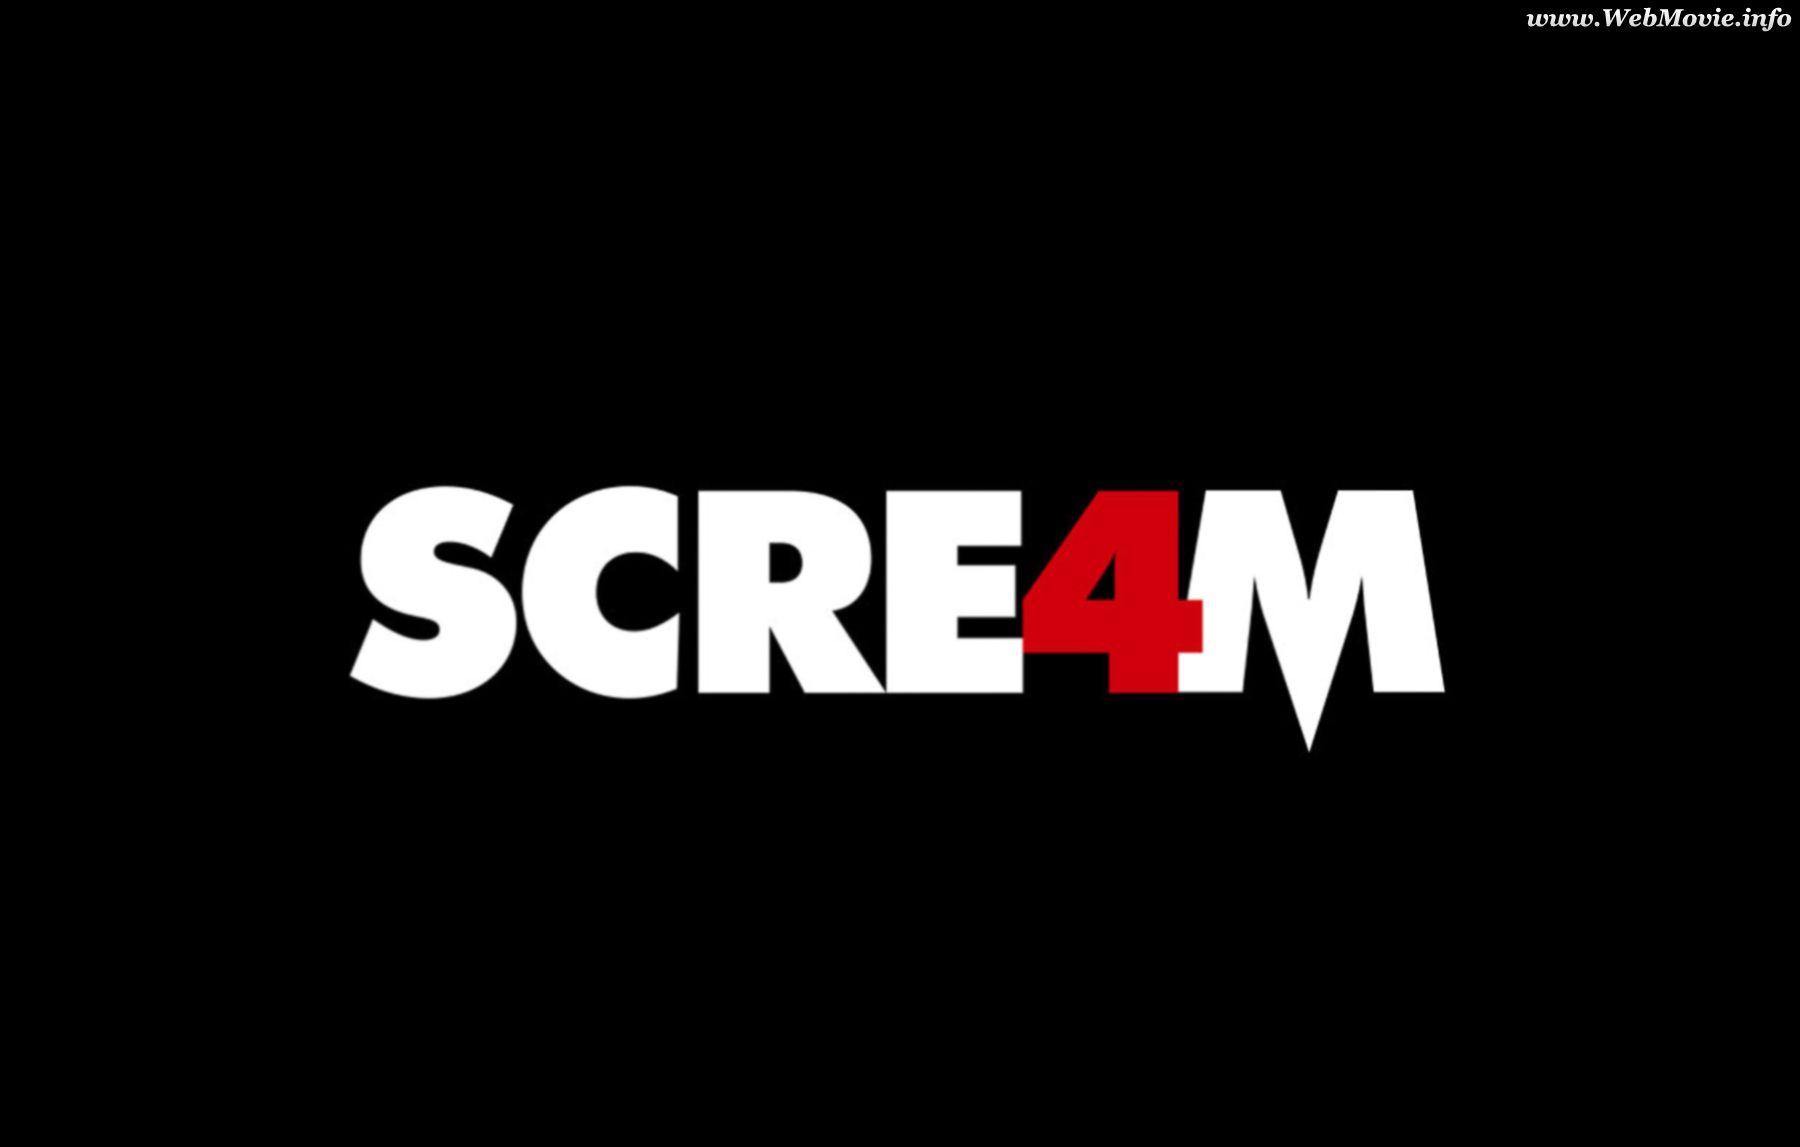 Scream 4 Movie Wallpaper